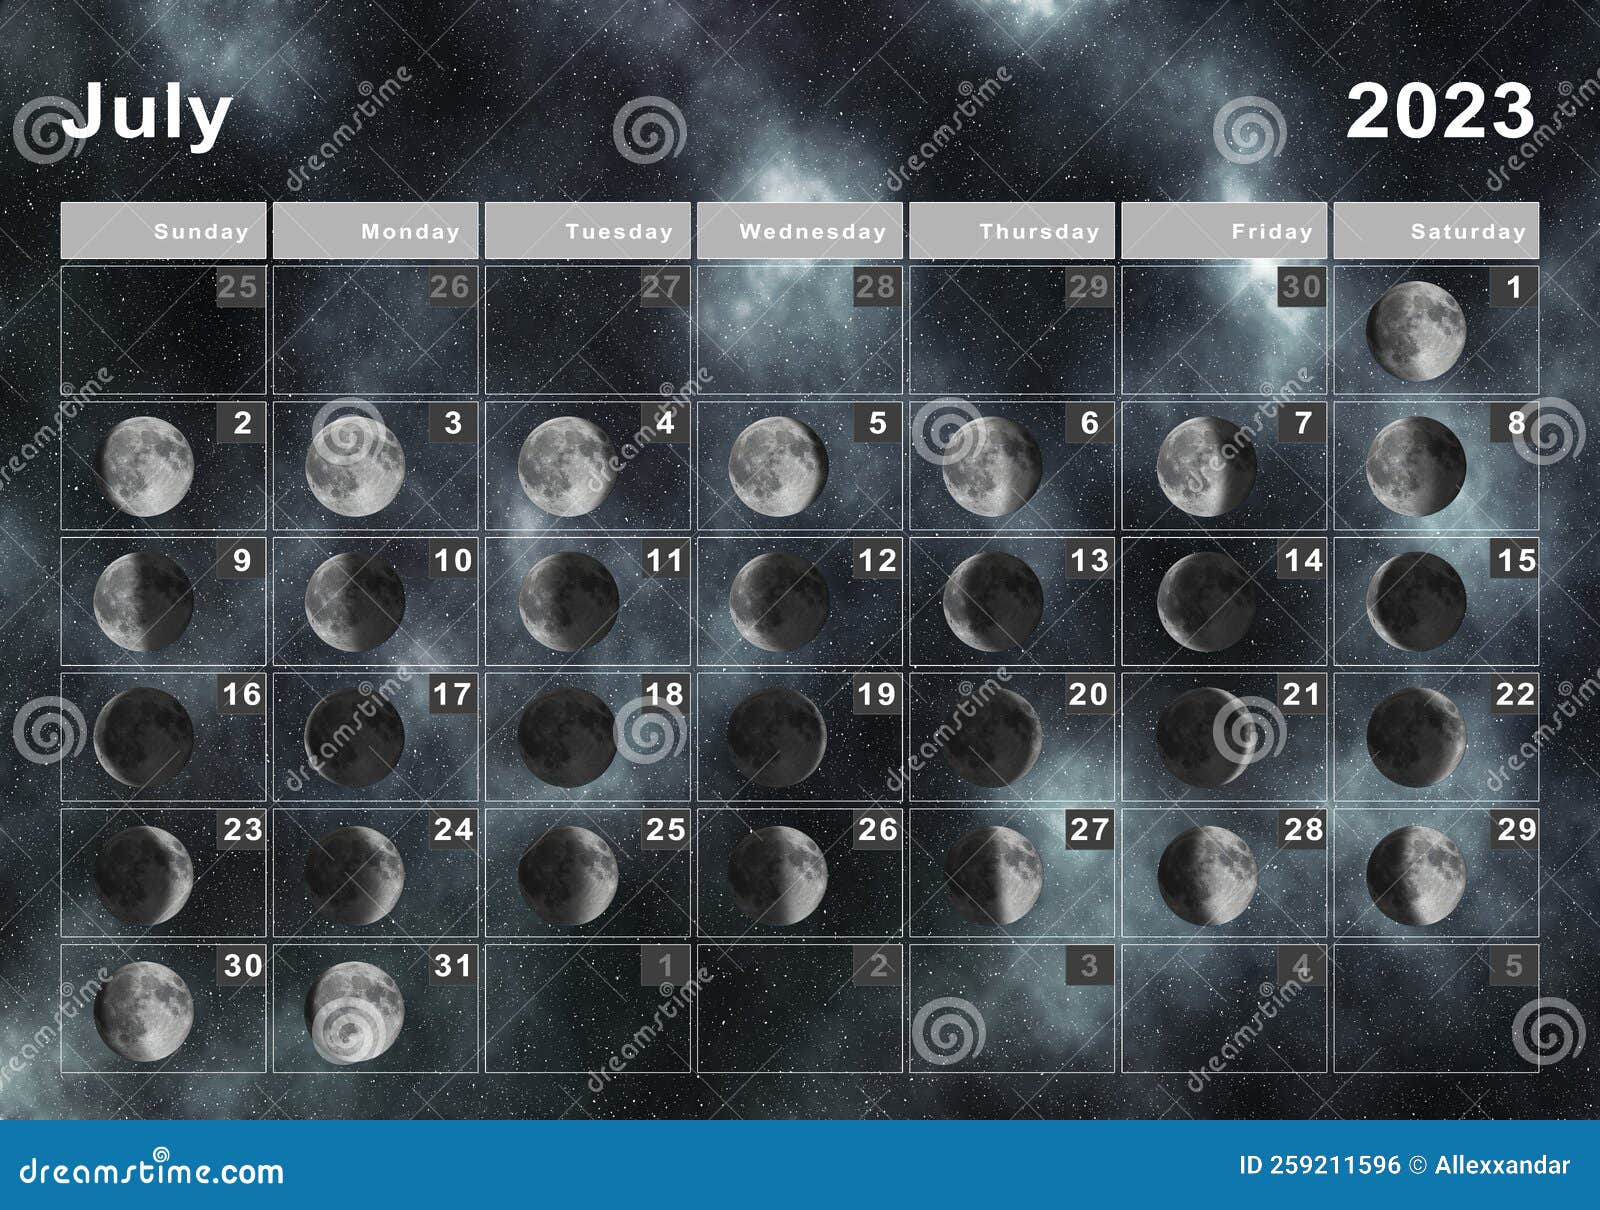 July 2023 Lunar Calendar, Moon Cycles Stock Illustration Illustration